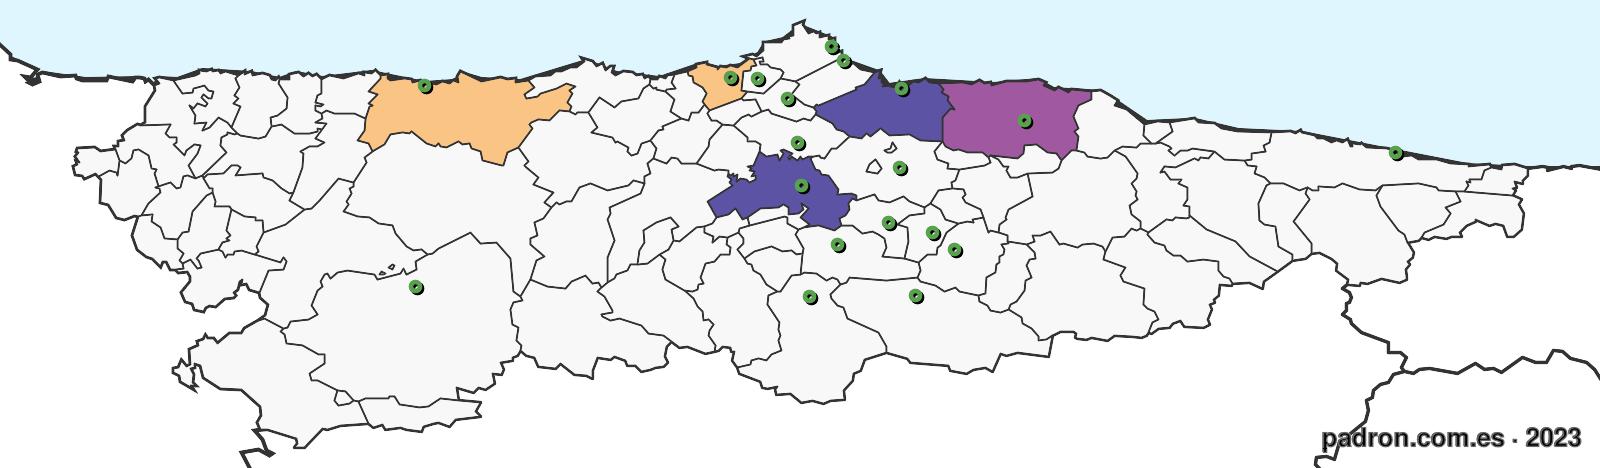 kazajos en asturias.